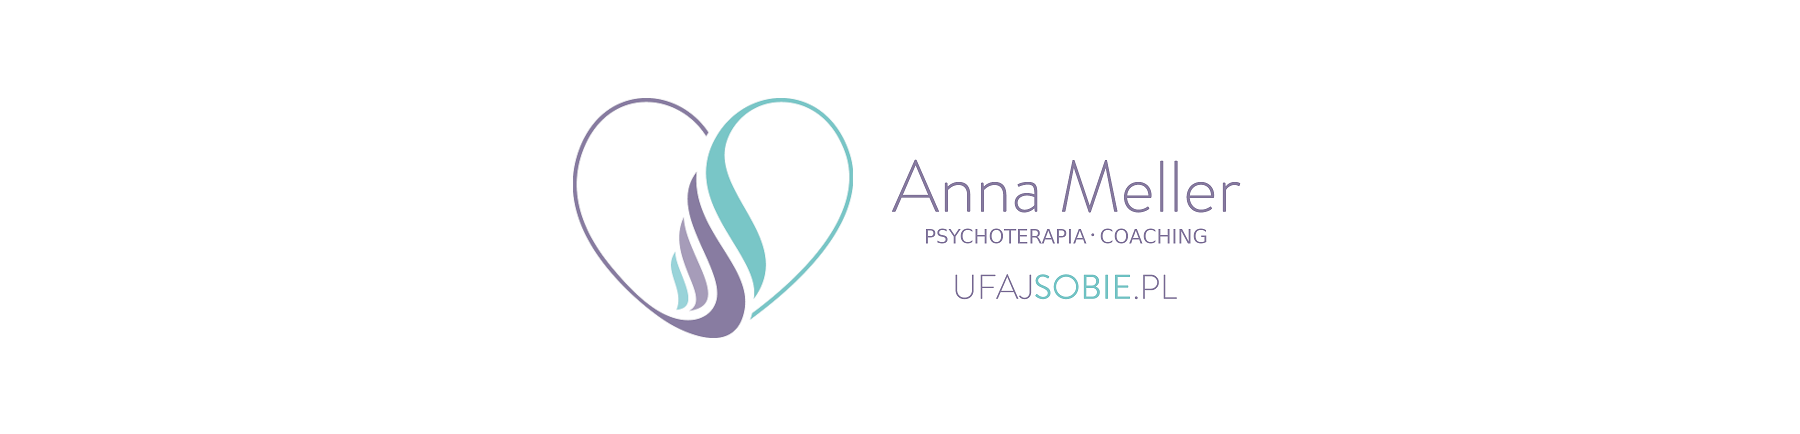 psychoterapia, coaching – Anna Meller, ufajsobie.pl